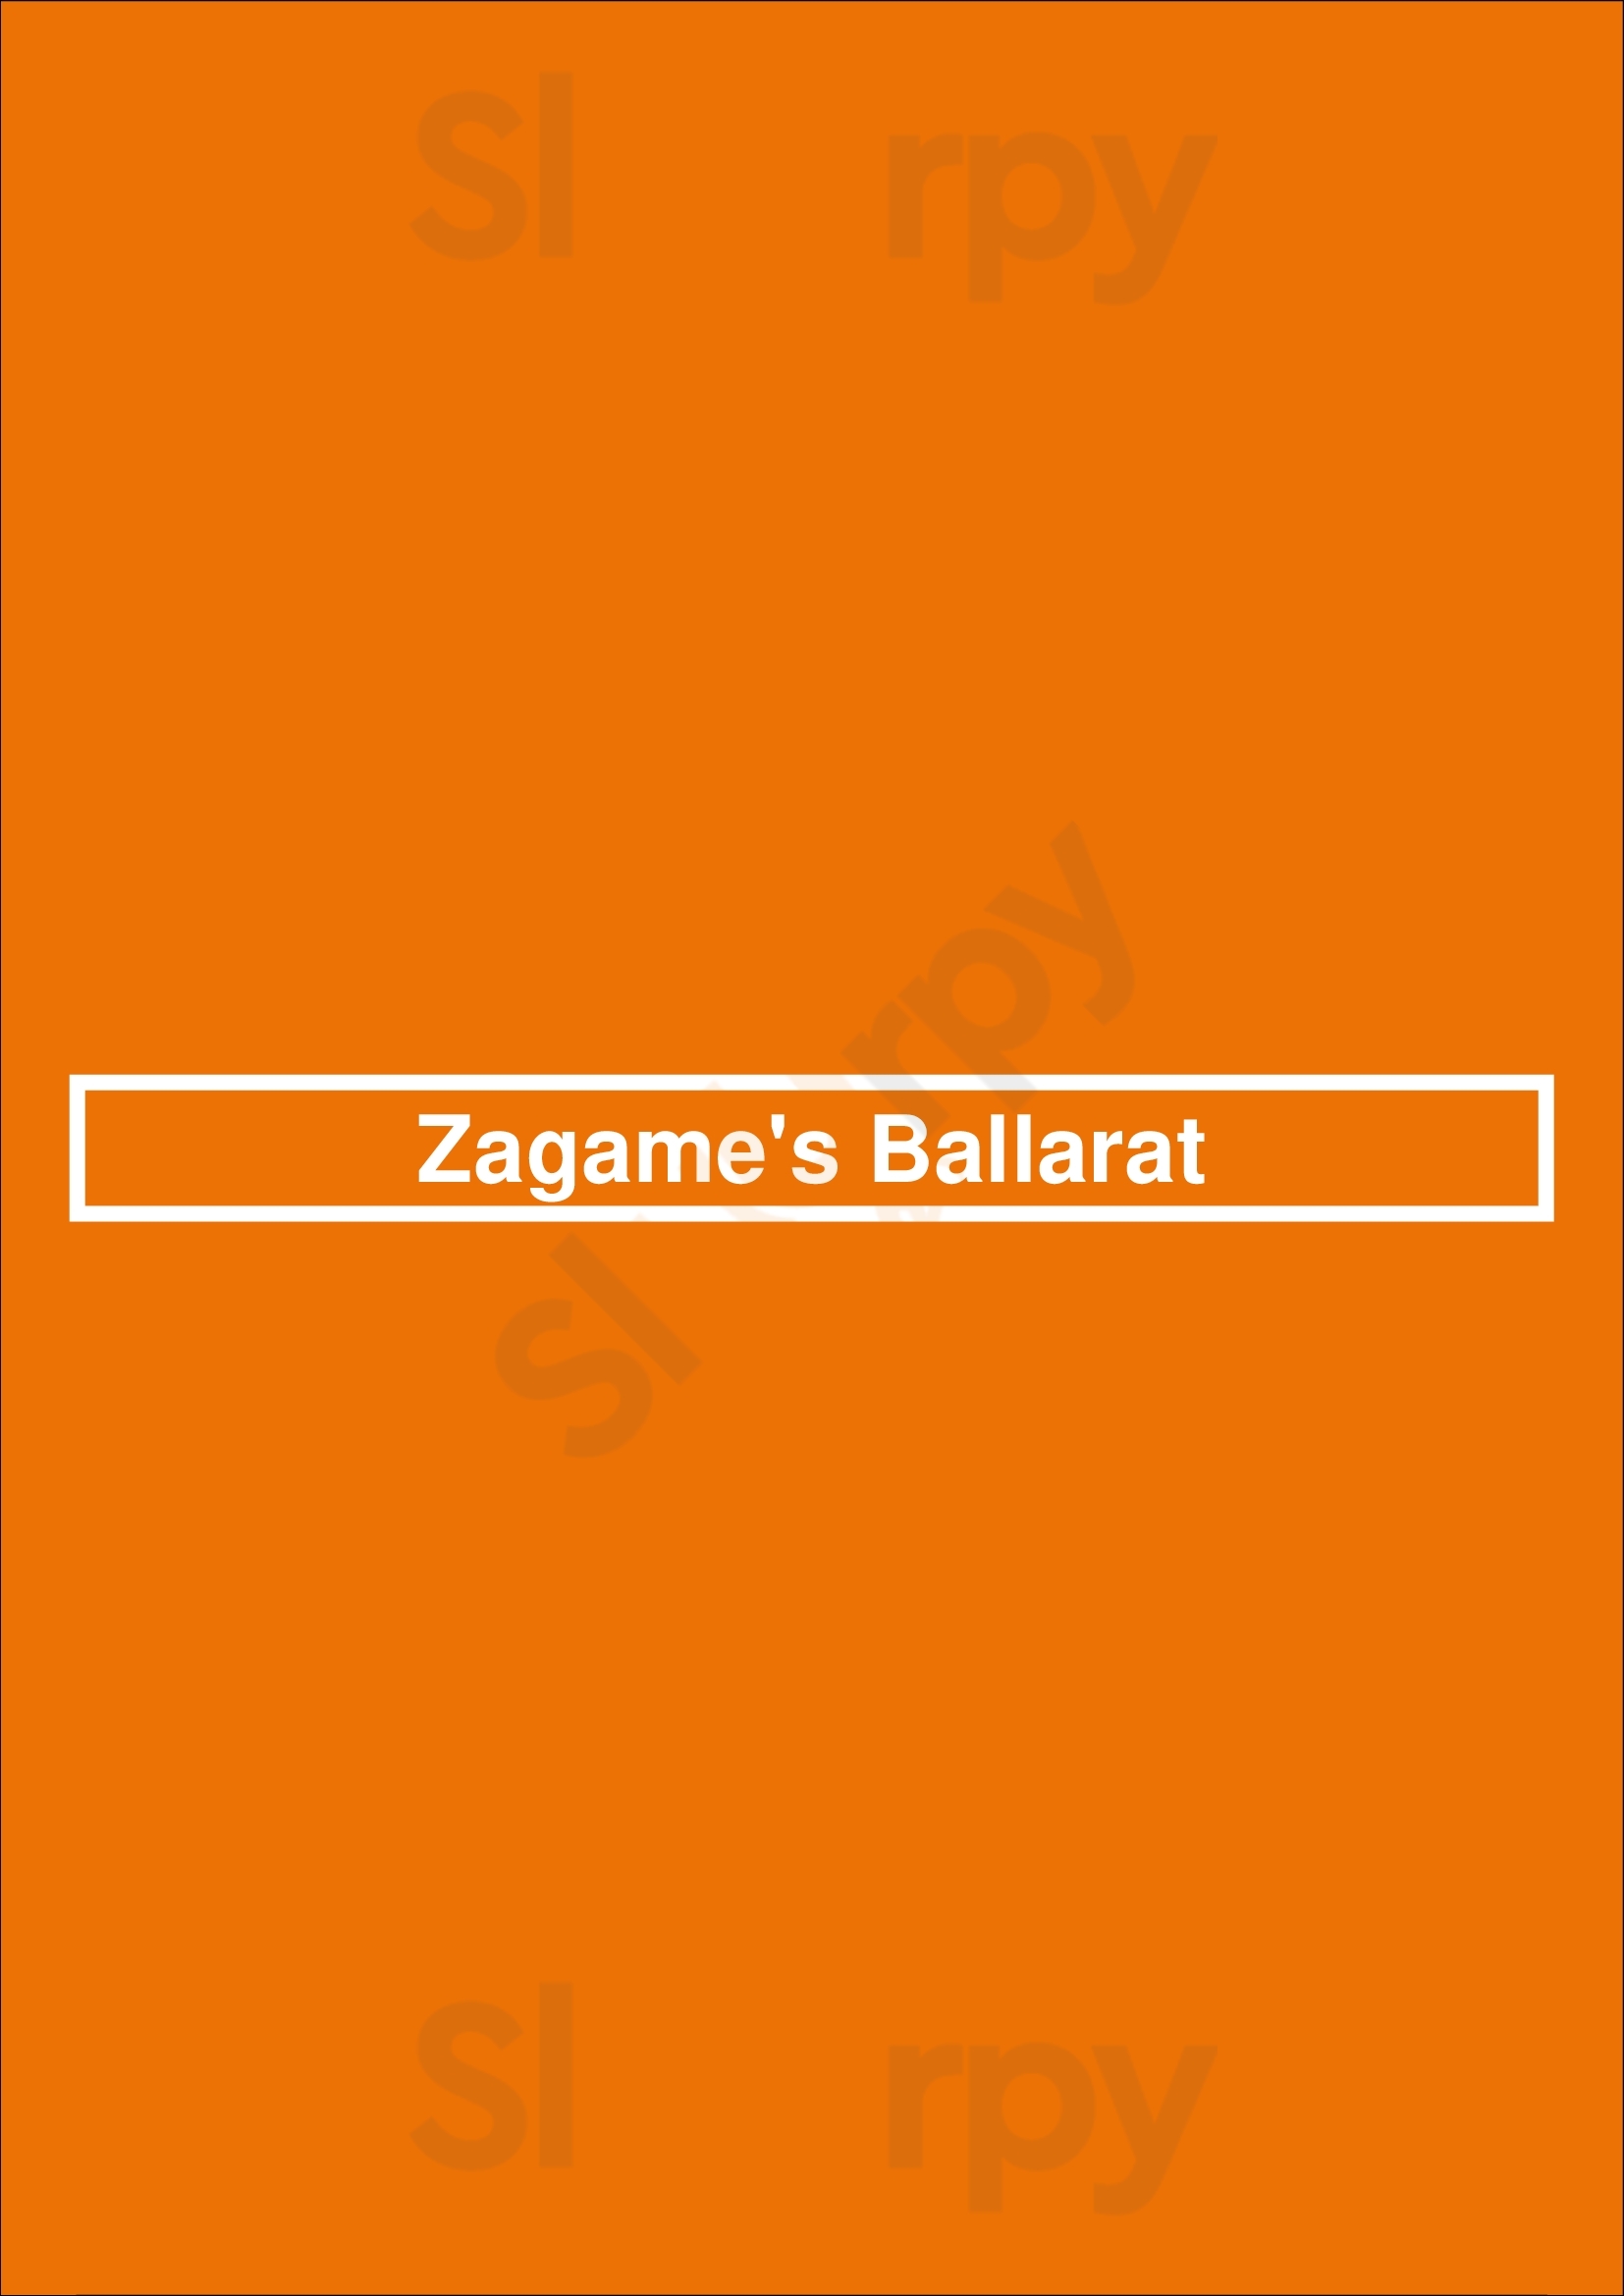 Zagame's Ballarat Ballarat Menu - 1